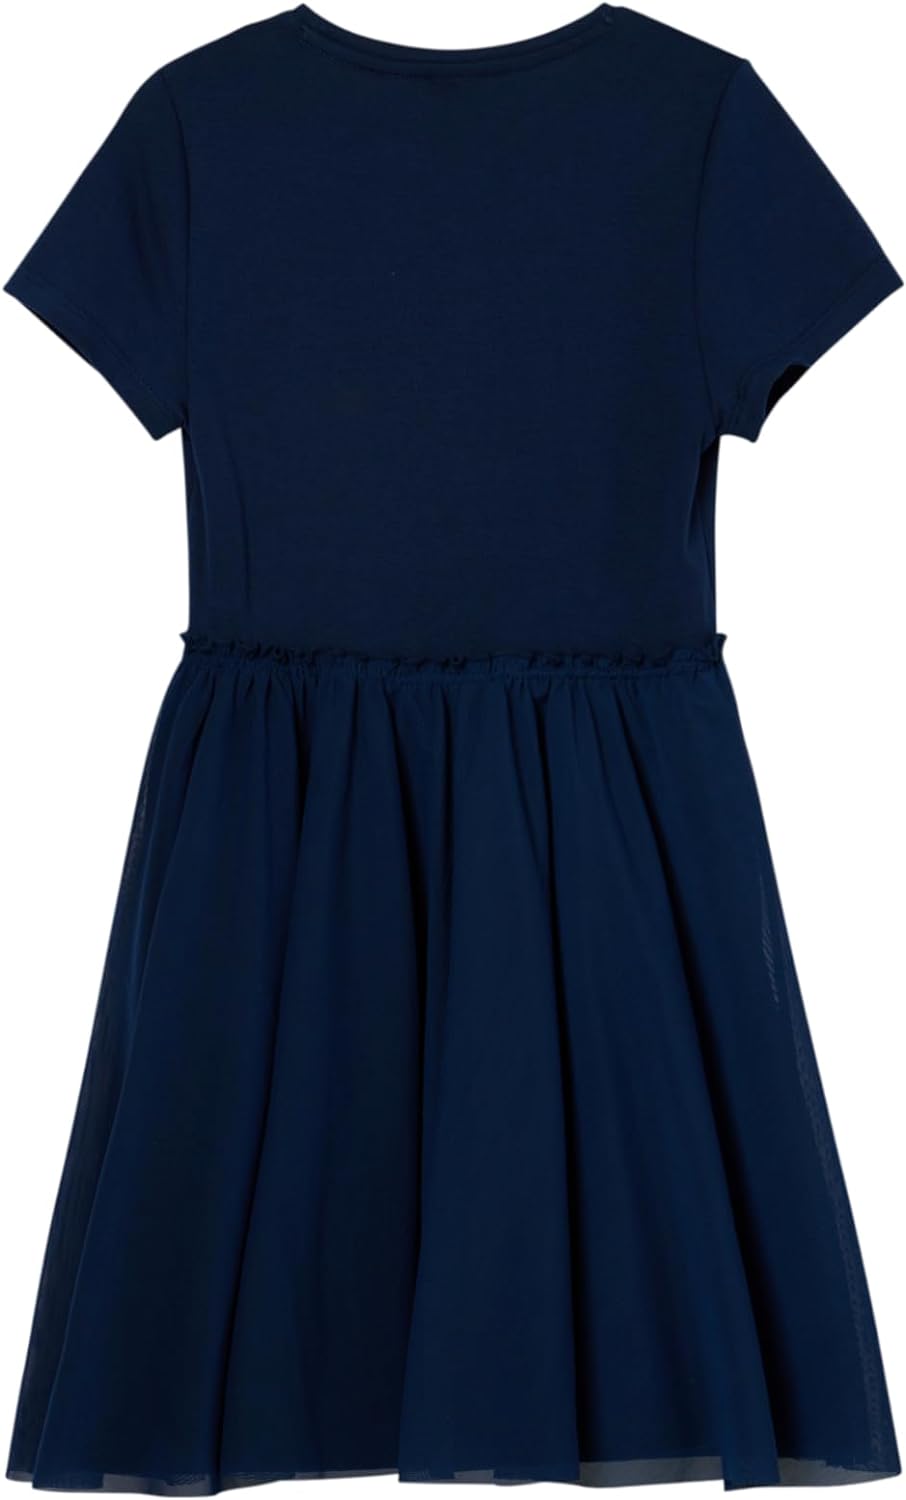 Mädchen Kleid Aitana Blau